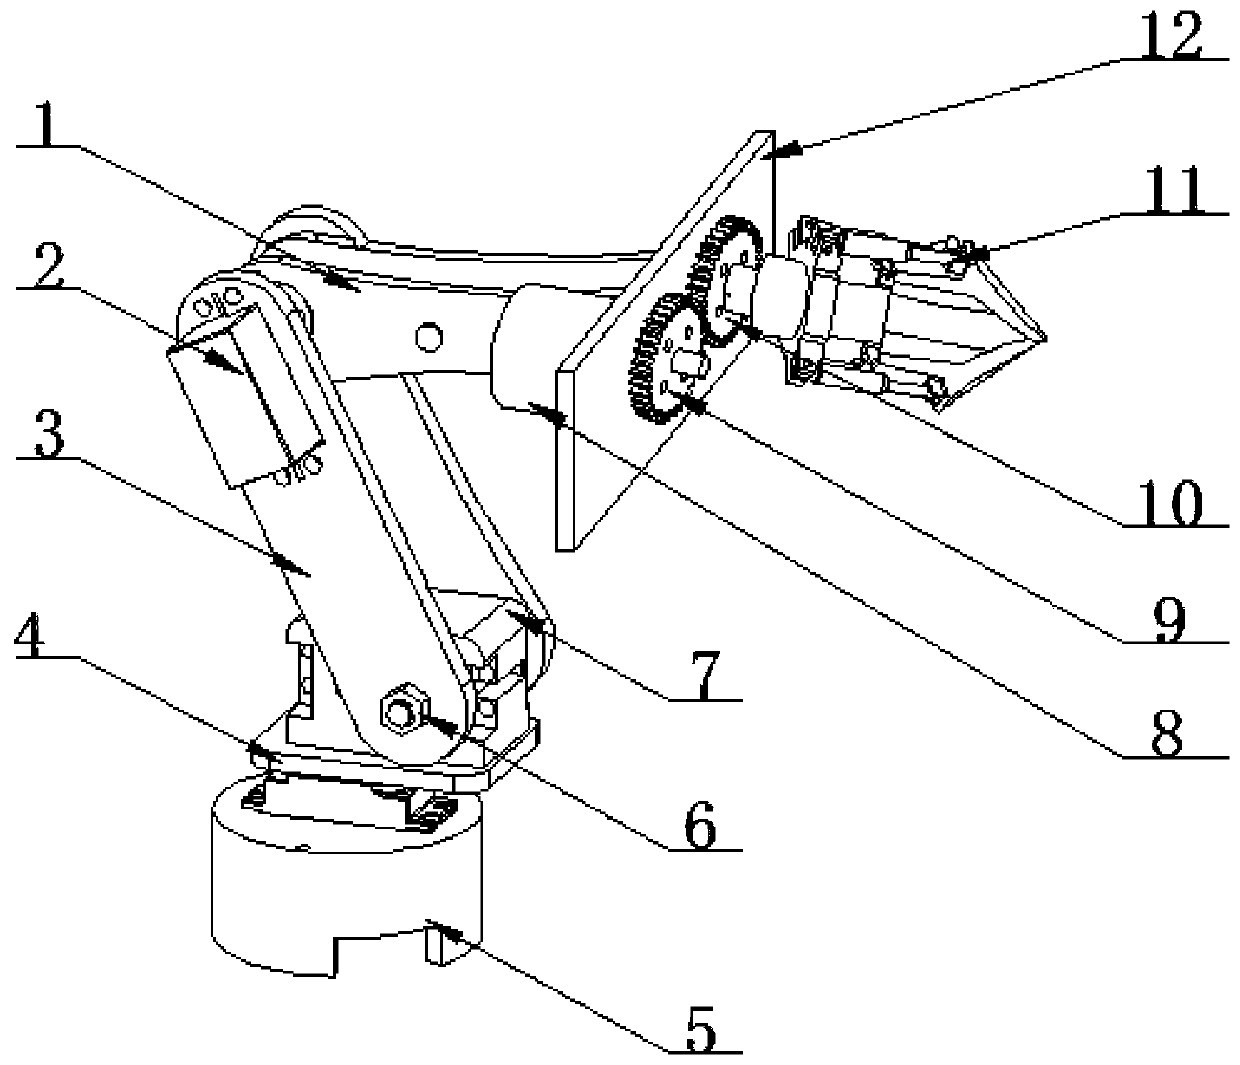 Rotary mechanical hand for machining